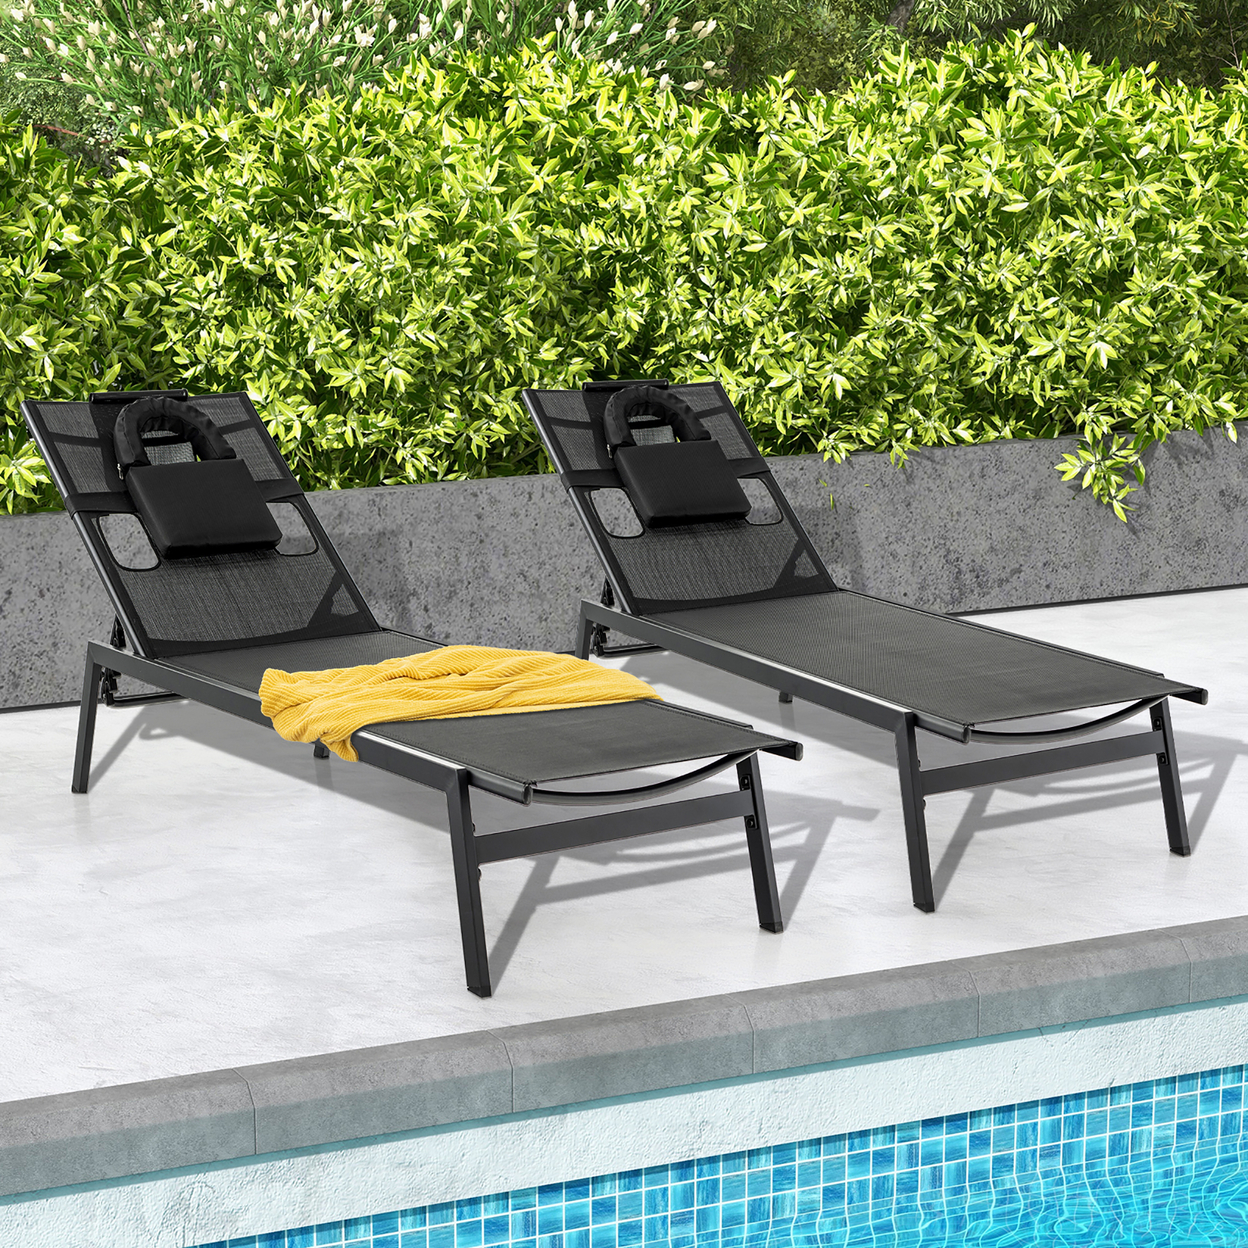 2 Pieces Patio Sunbathing Lounge Chair W/ Face Hole & Detachable Head Pillows Poolside